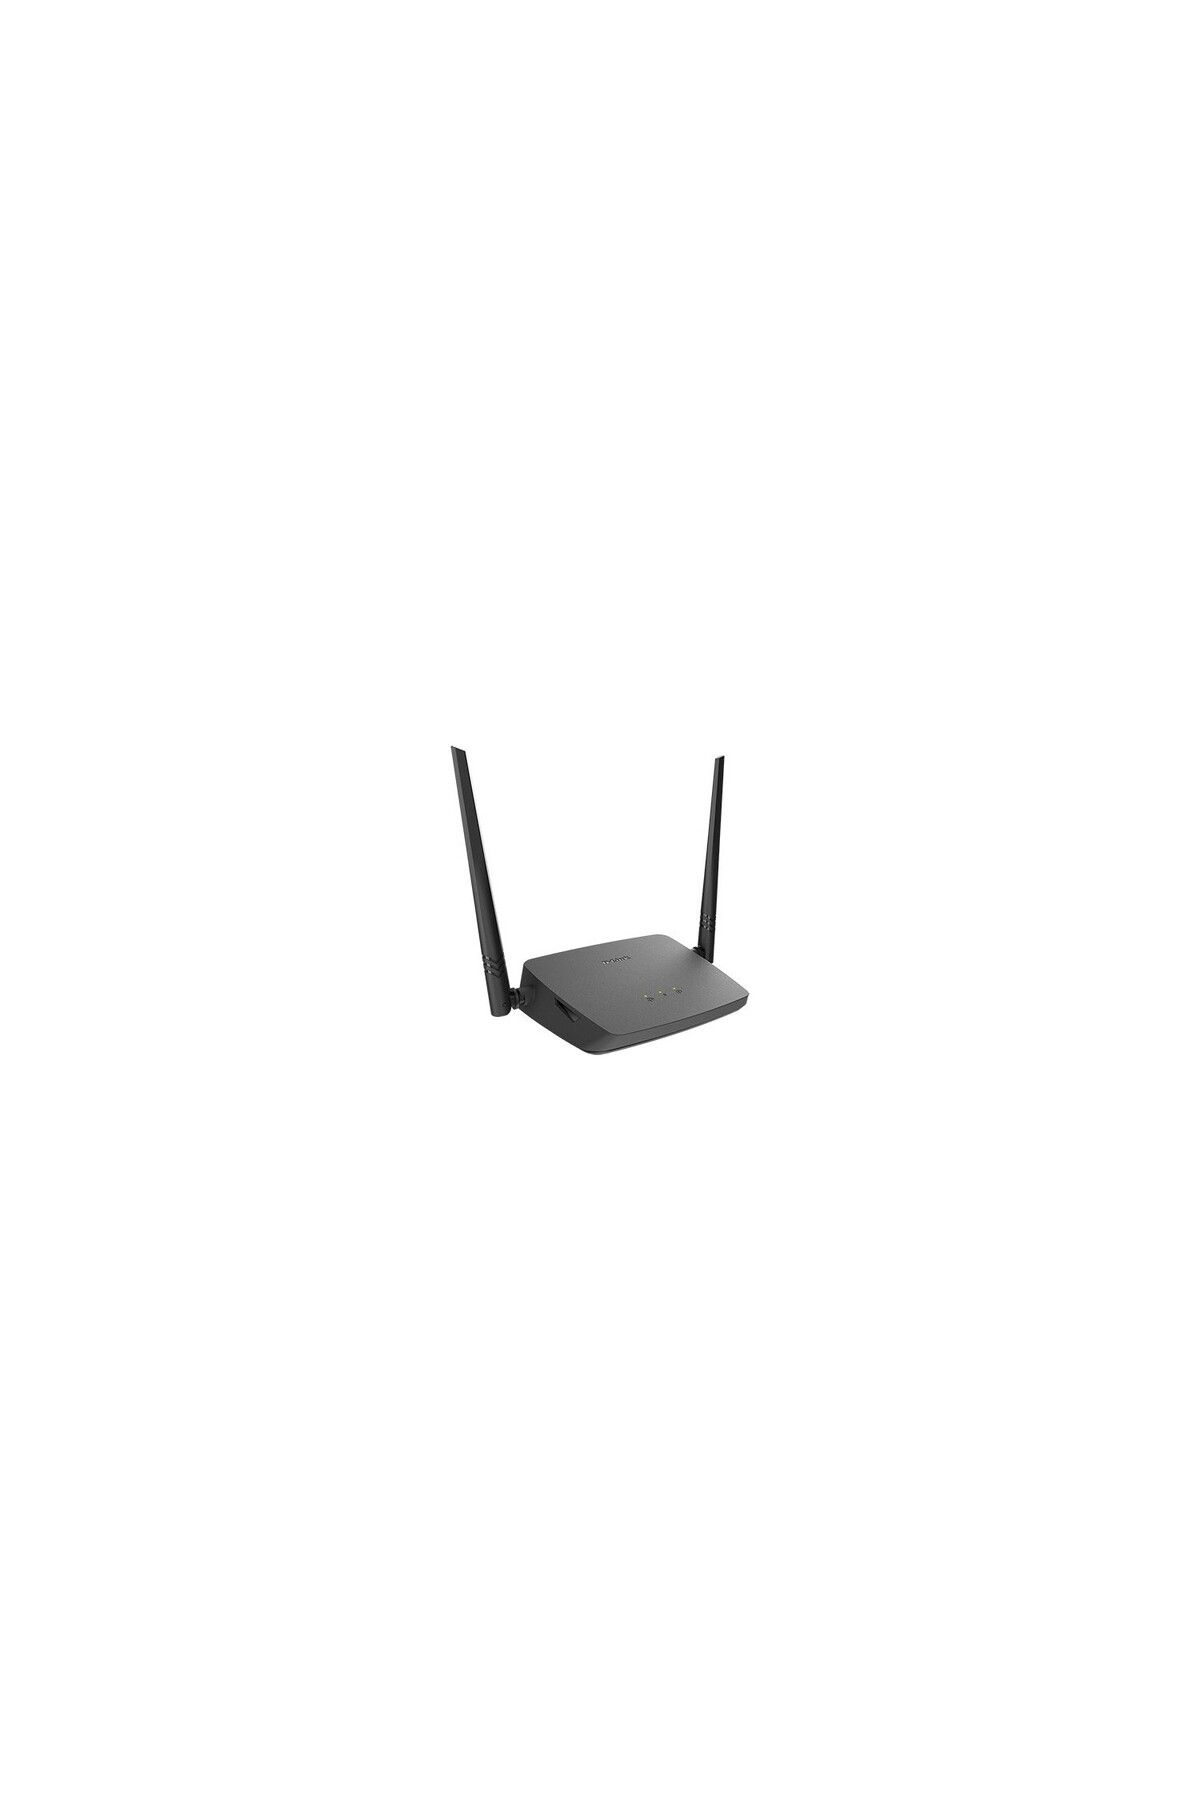 sommeow D-link Dır-615 X1 Wireless N300 Router